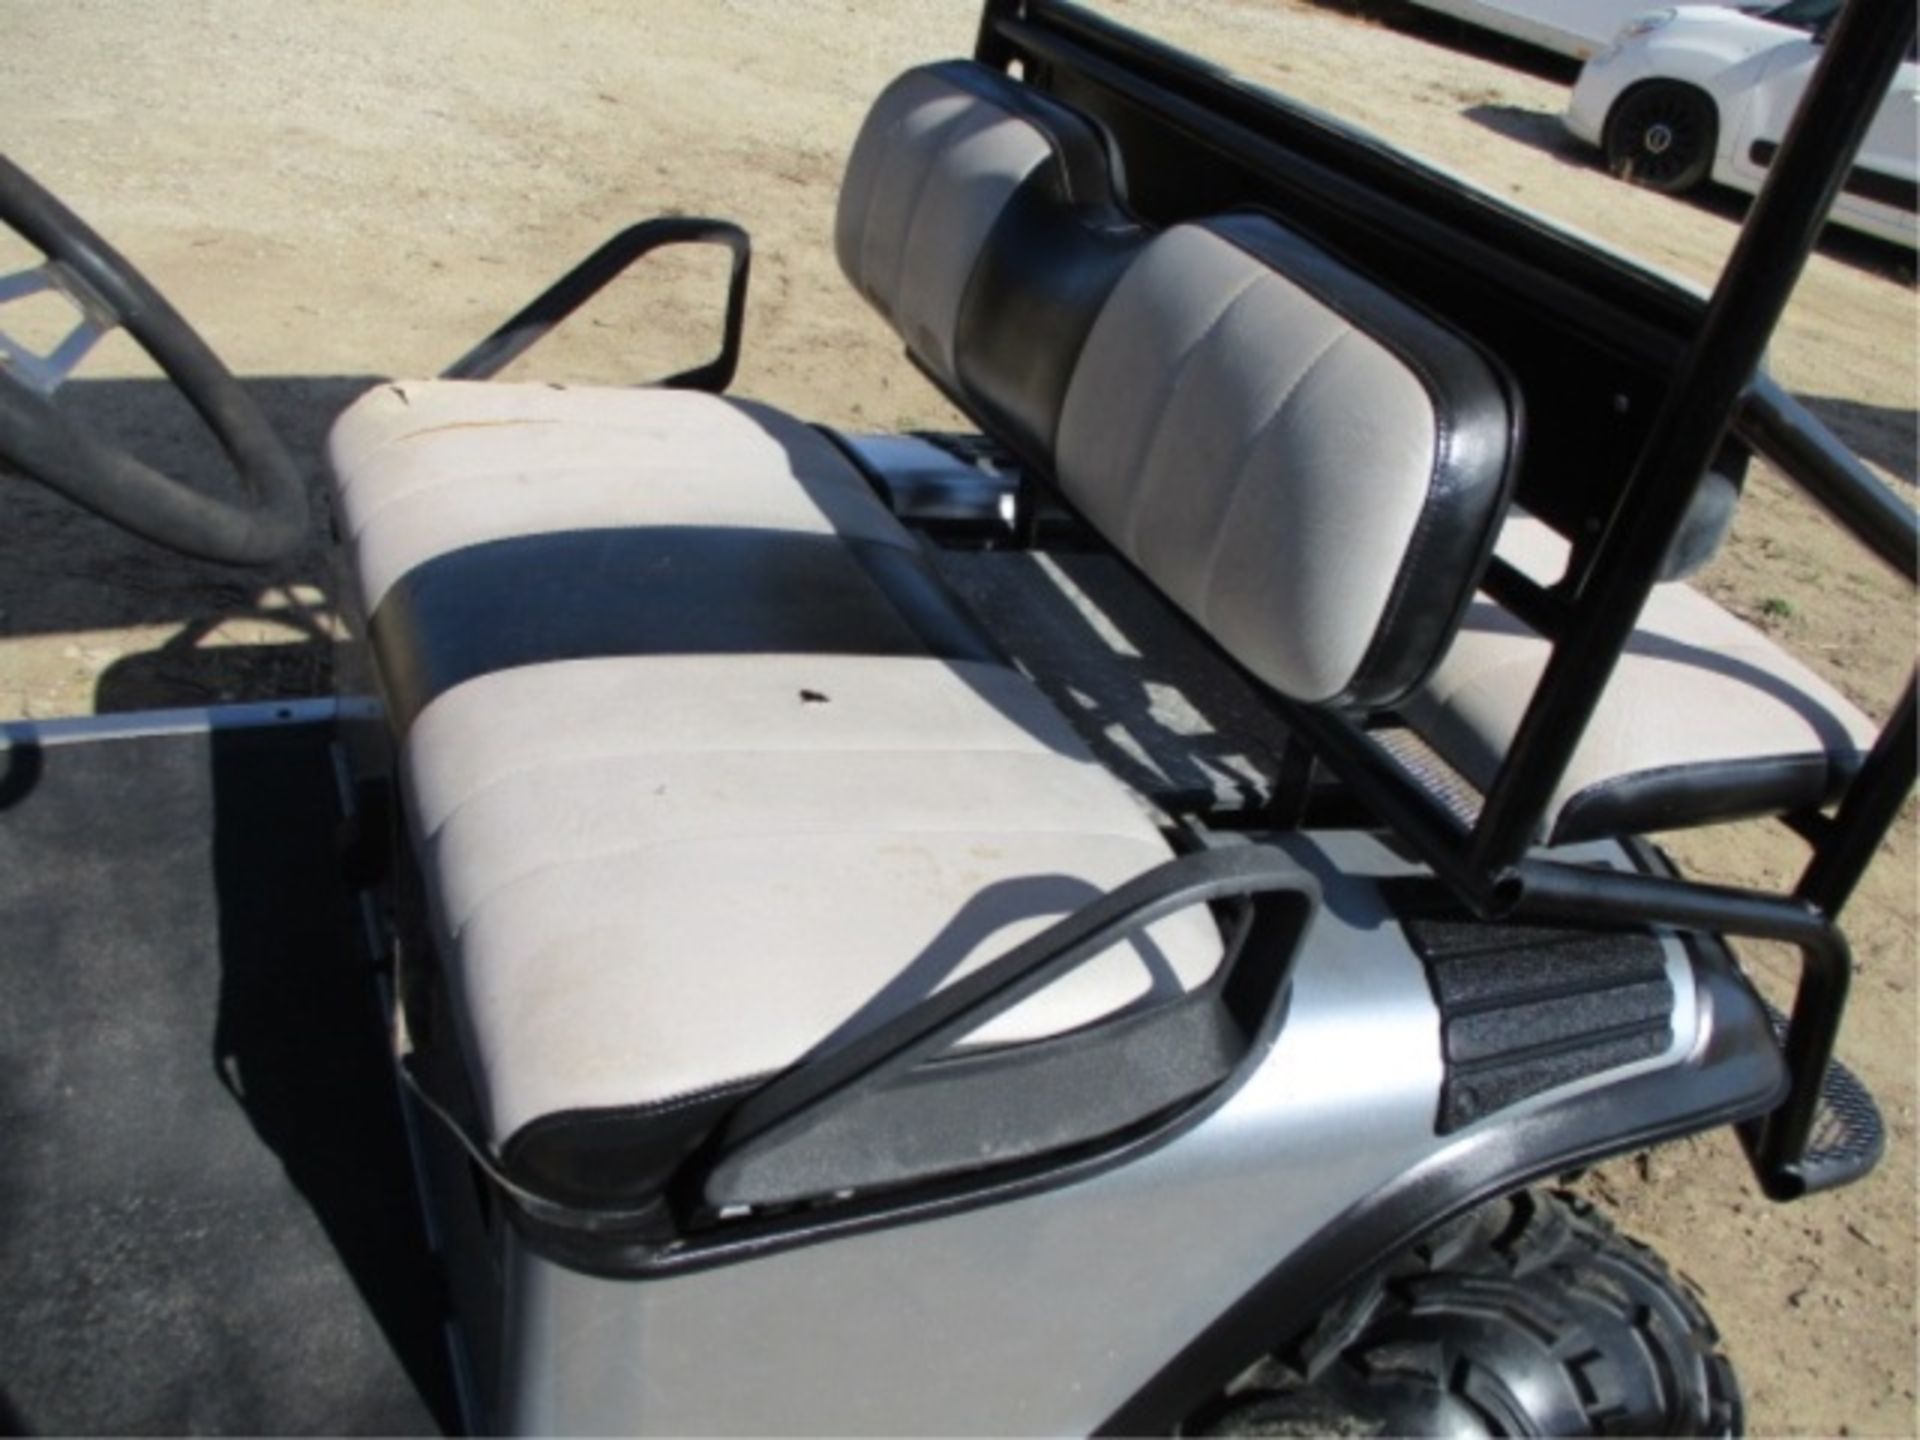 EzGo Golf Cart, 2017 Predator 670cc Gas Engine, Lift Kit, Custom Roll-Cage W/Canopy, S/N: 912224 - Image 16 of 39